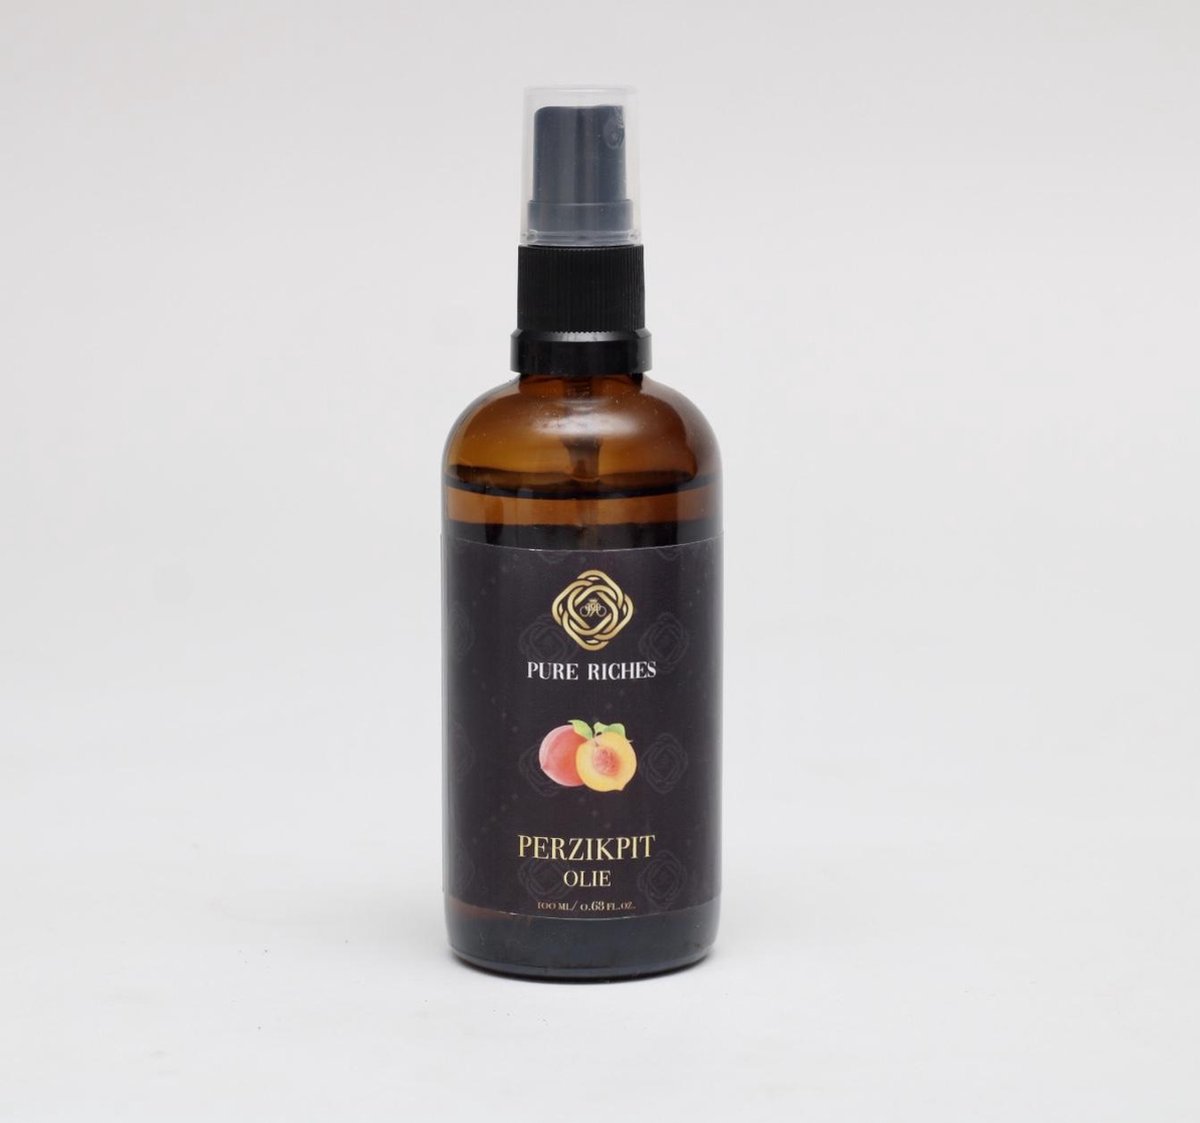 Pure Riches Perzikpit olie 100ml - 100% biologisch- zacht makende basisolie voor de huid.